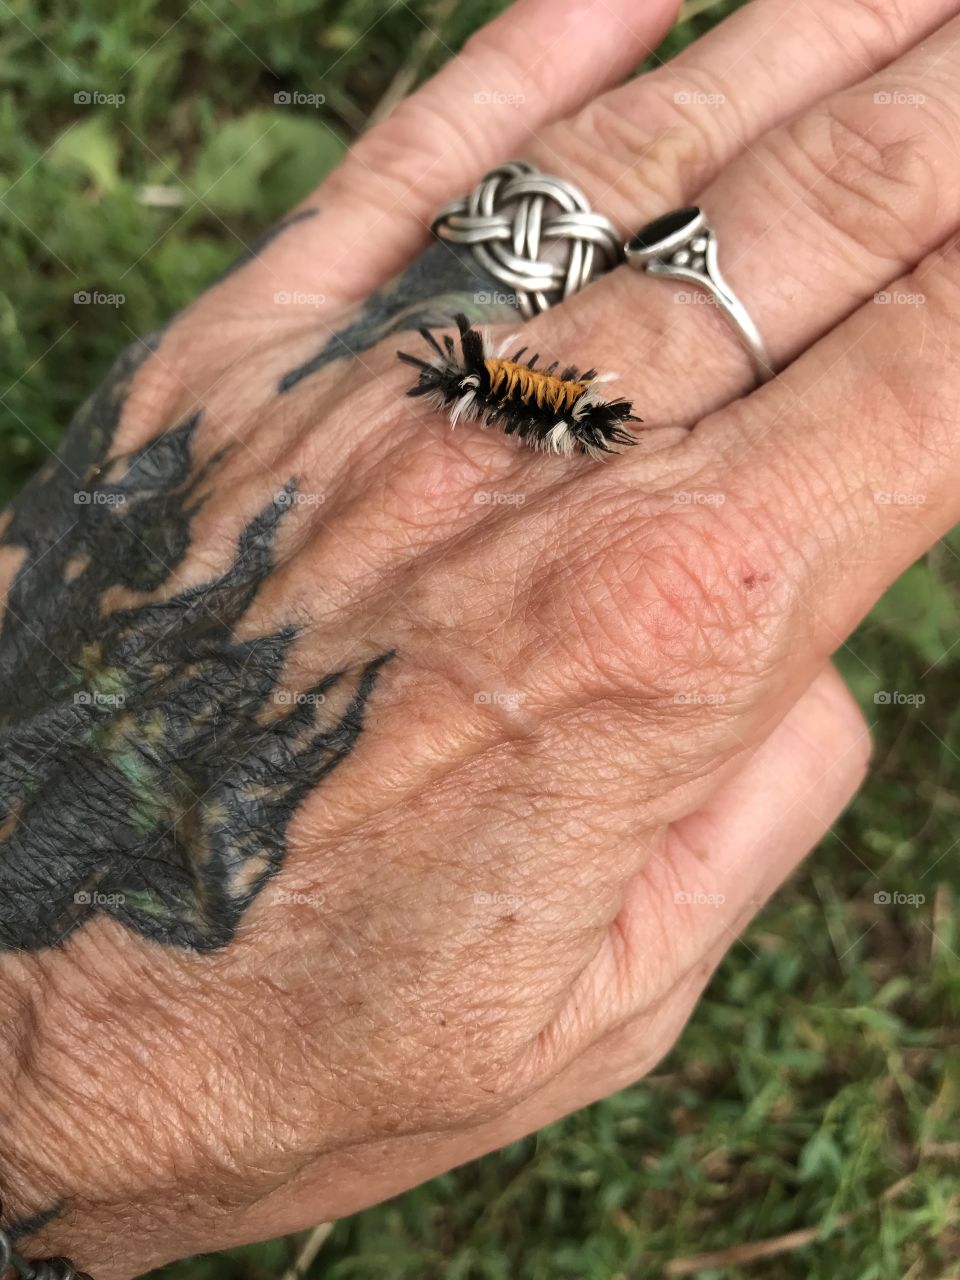 Unique caterpillar crawling across hand